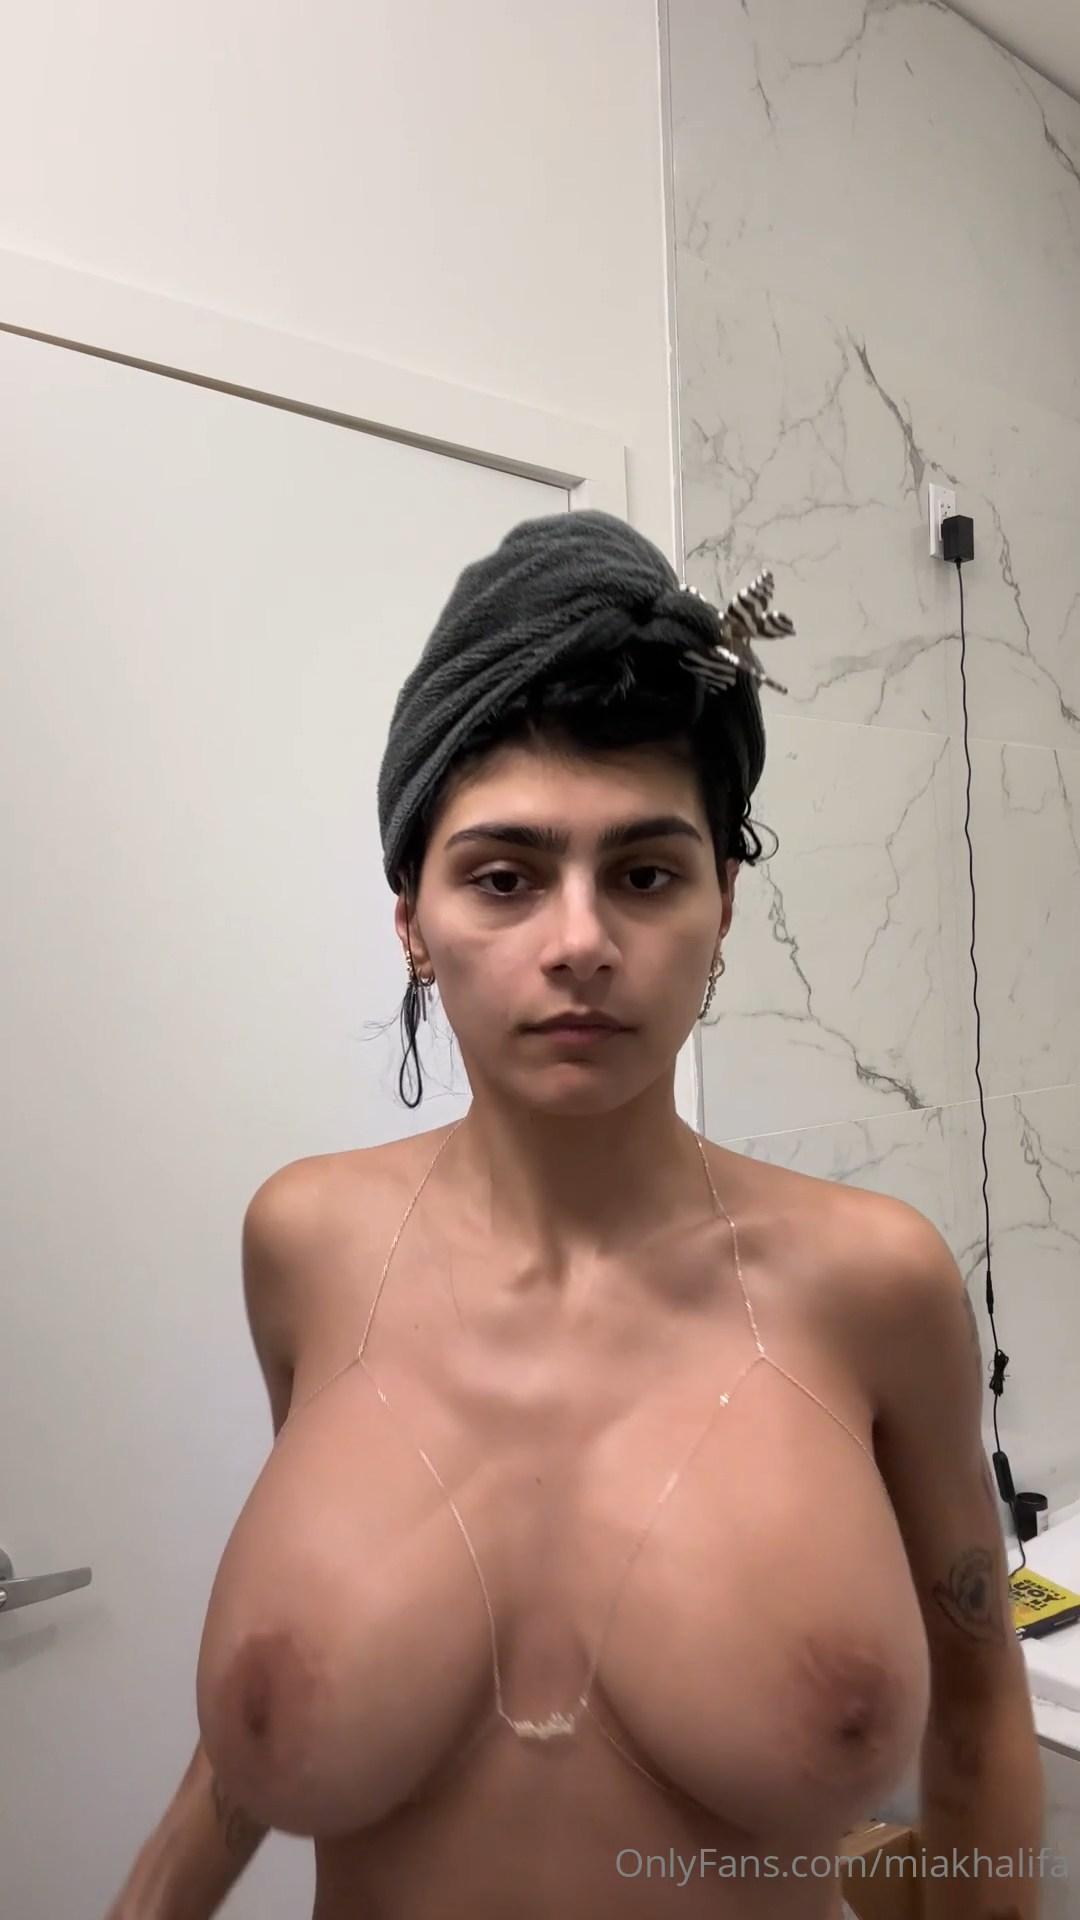 mia khalifa nude dressing onlyfans video leaked kkhnik